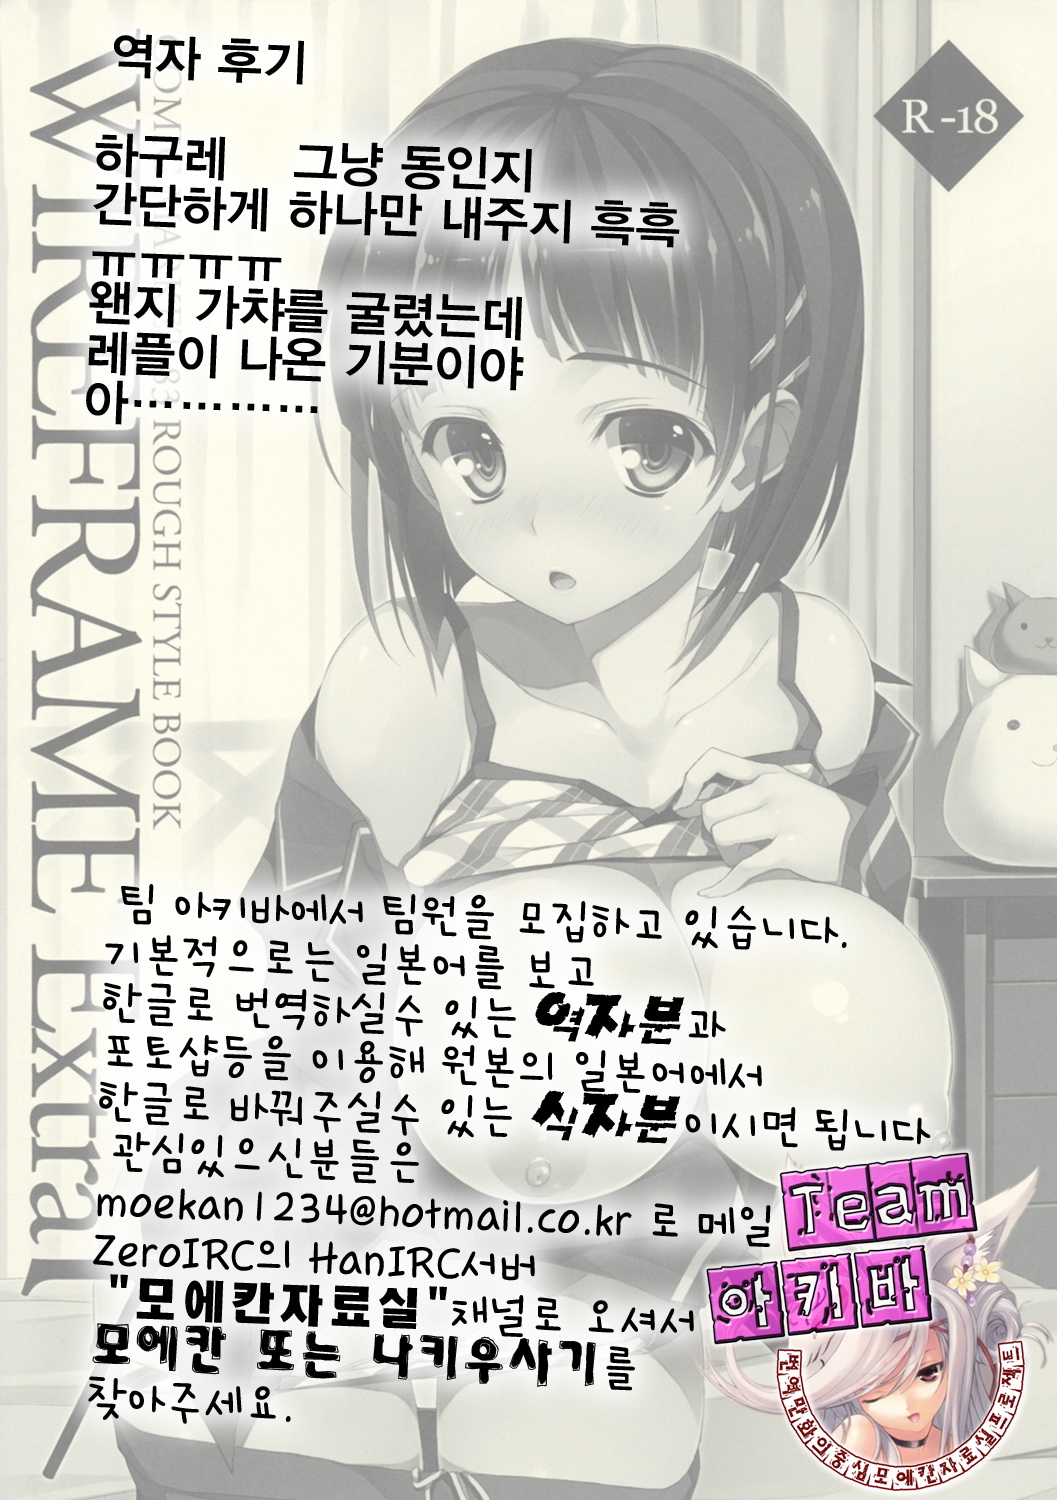 (C83) [WIREFRAME (Yuuki Hagure)] WIREFRAME Extra 7 (Sword Art Online) (korean) (C83) [WIREFRAME (憂姫はぐれ)] WIREFRAME Extra 7 (ソードアート・オンライン) [韓国翻訳]